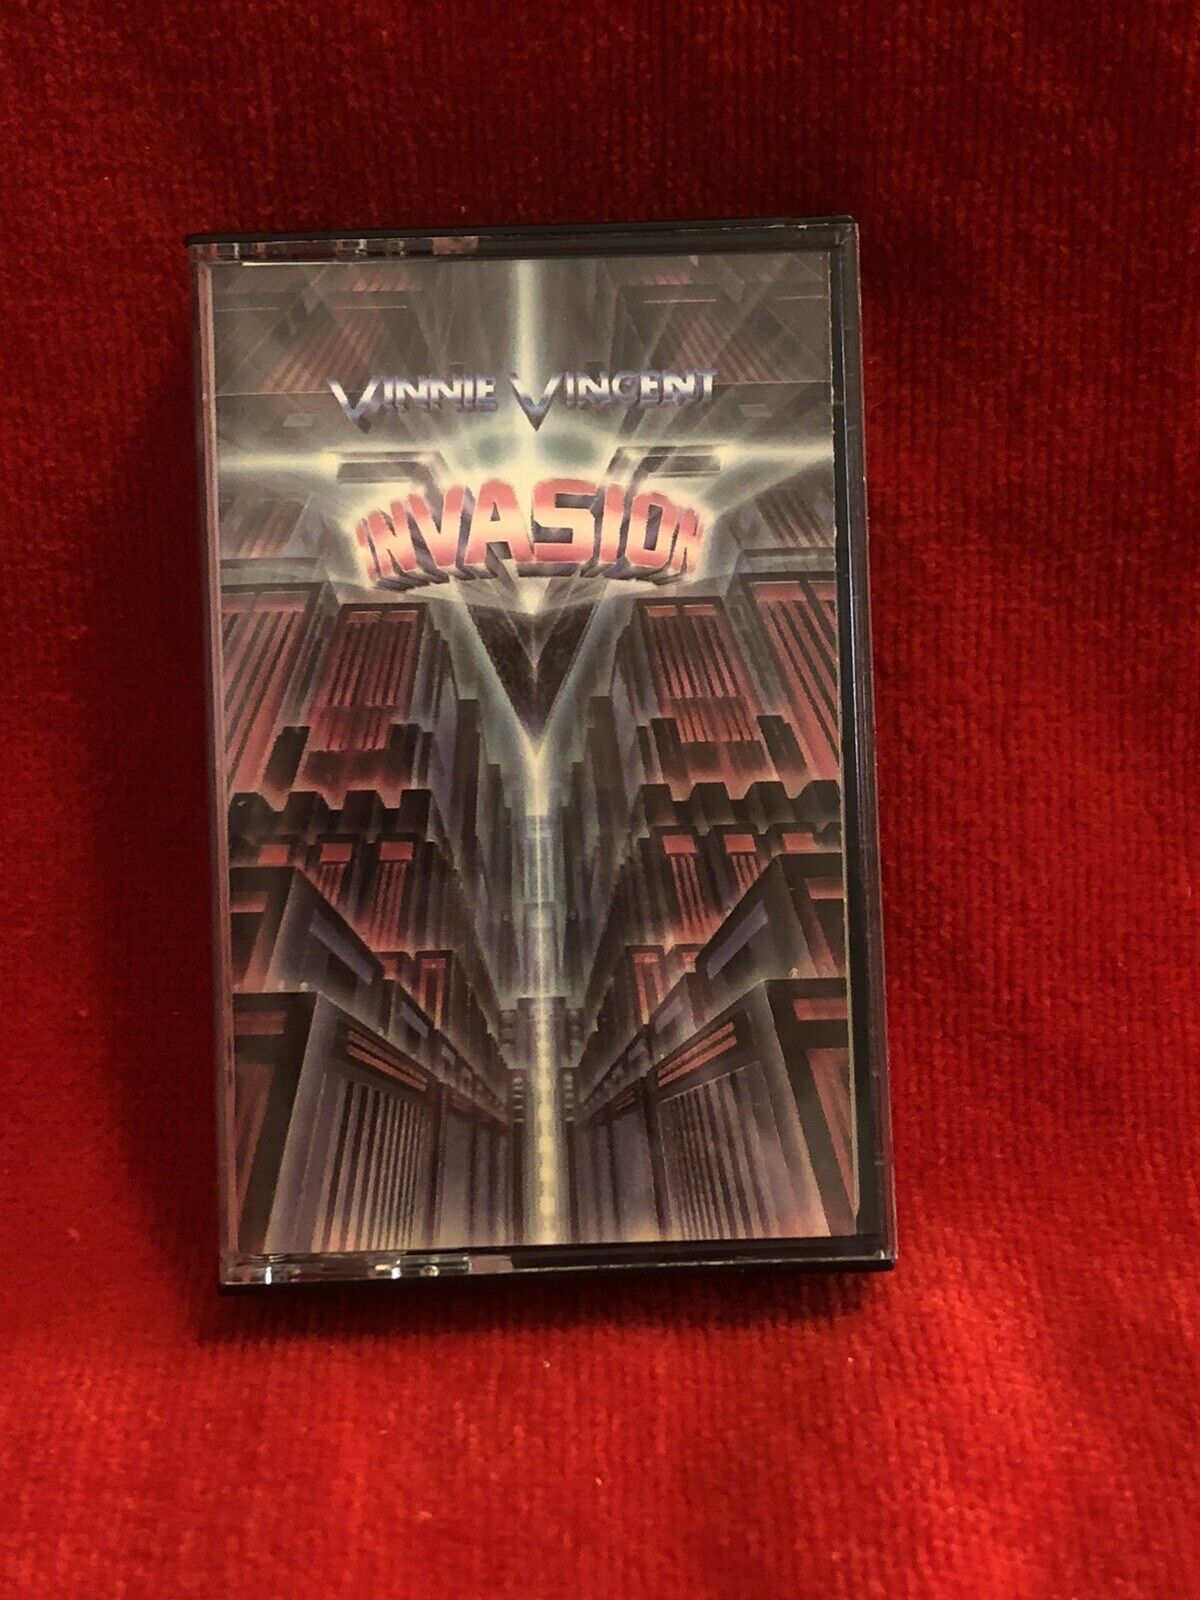 Vinnie Vincent Invasion Self Titled Album Cassette Tape Chrysalis Records 1986